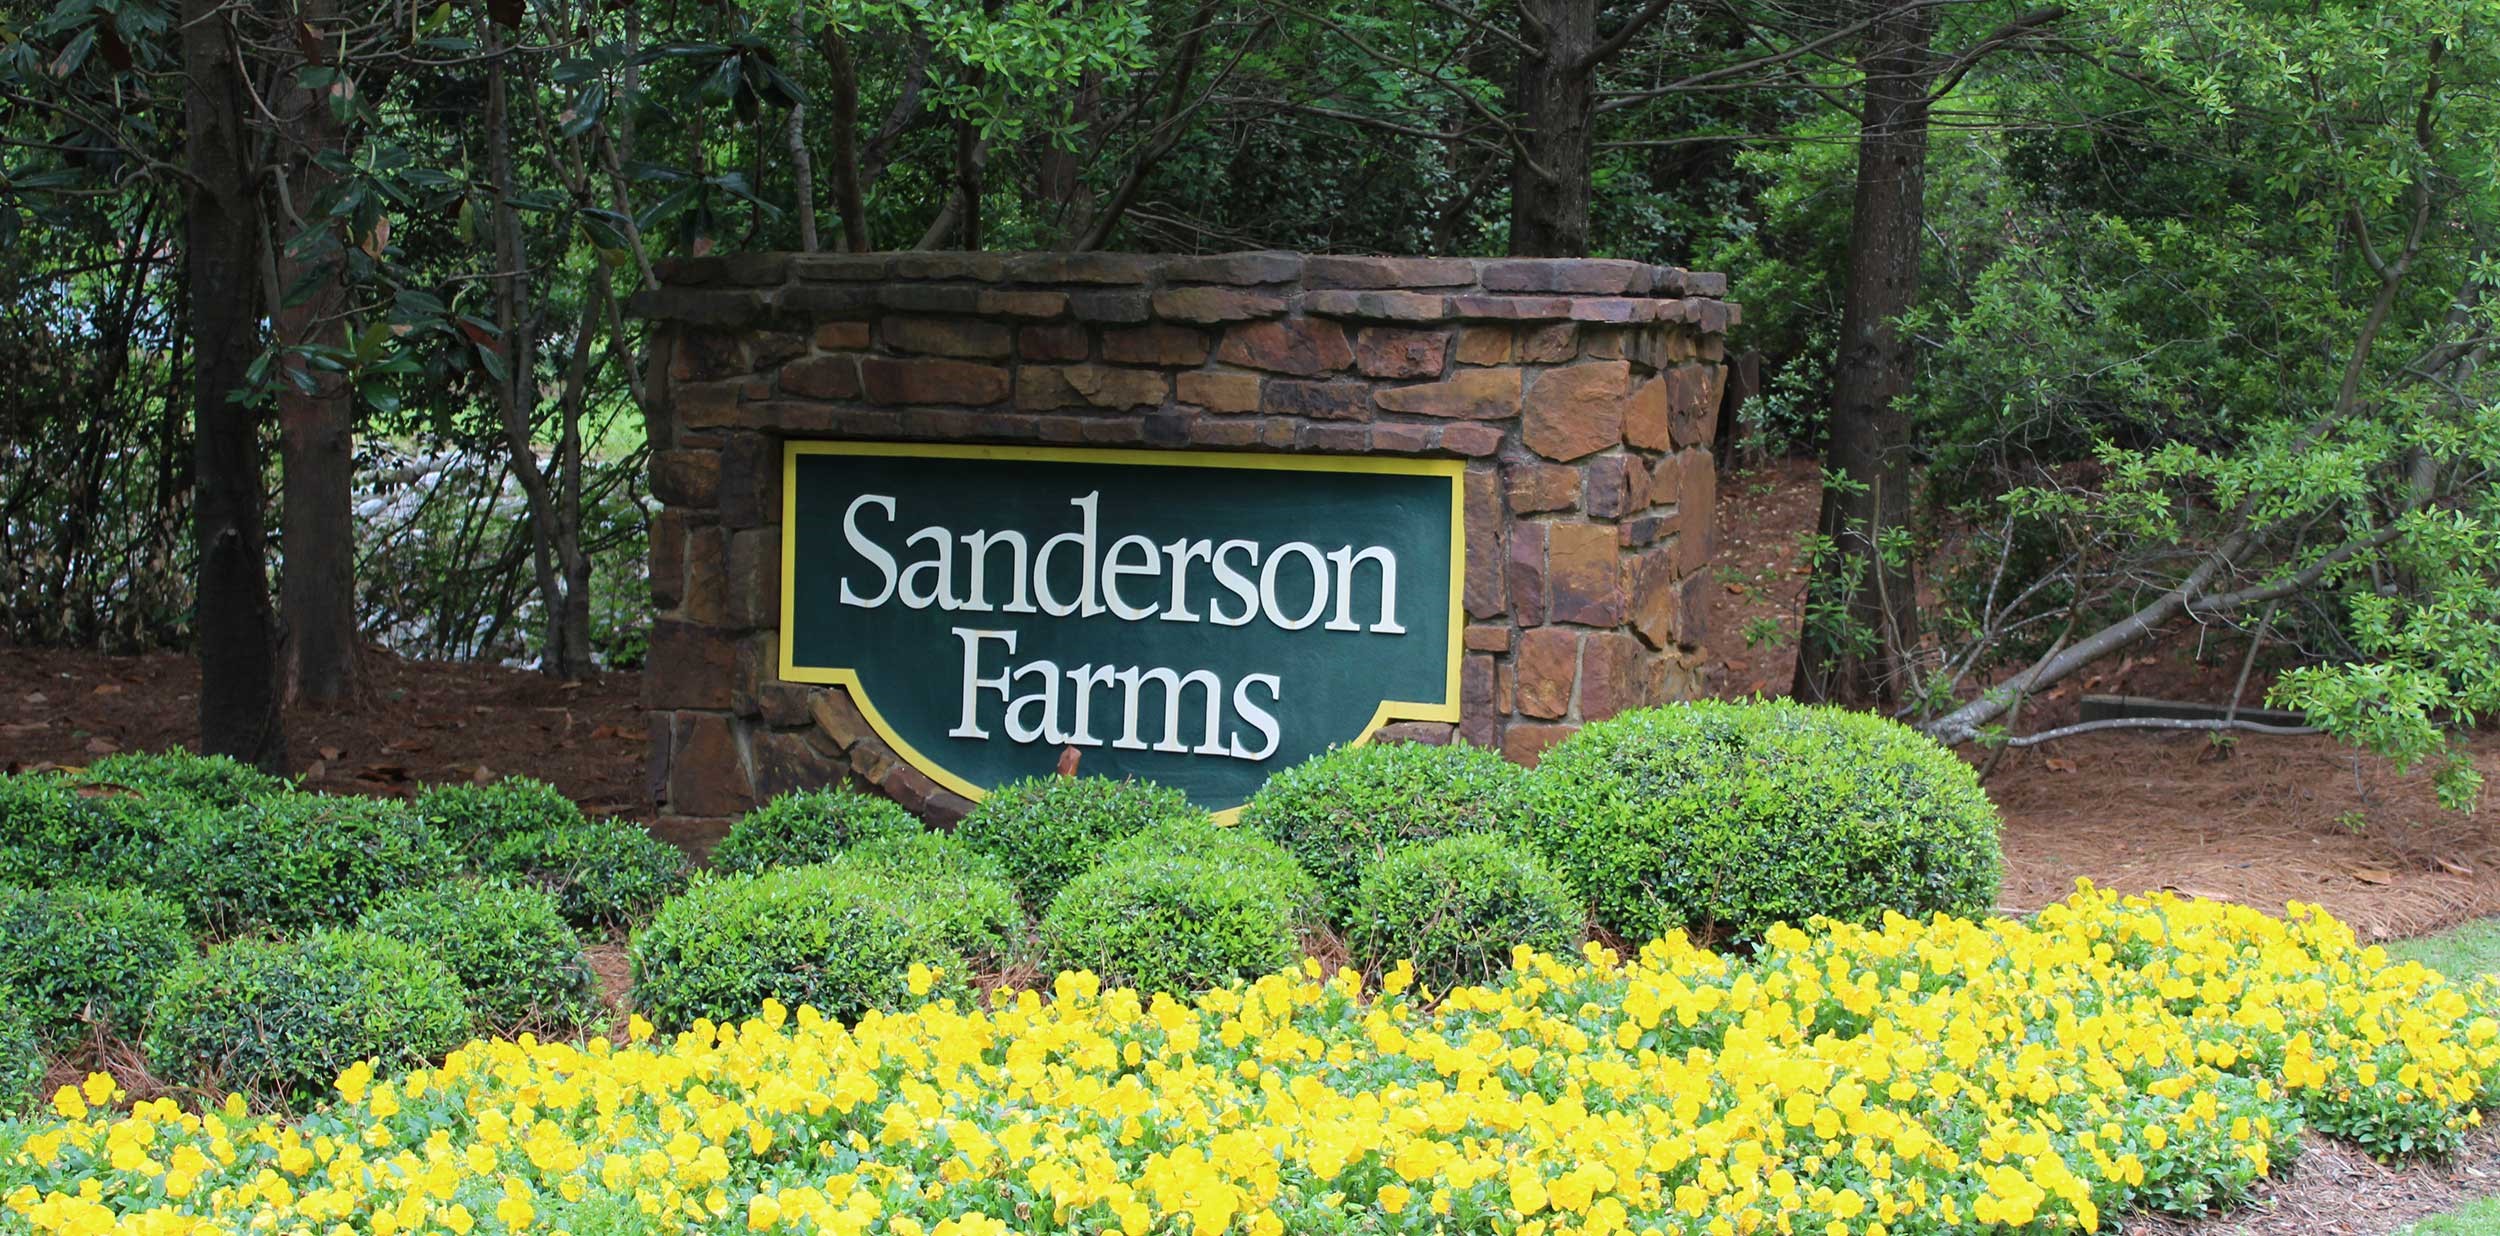 sanderson-farms-logo-entrance.jpg